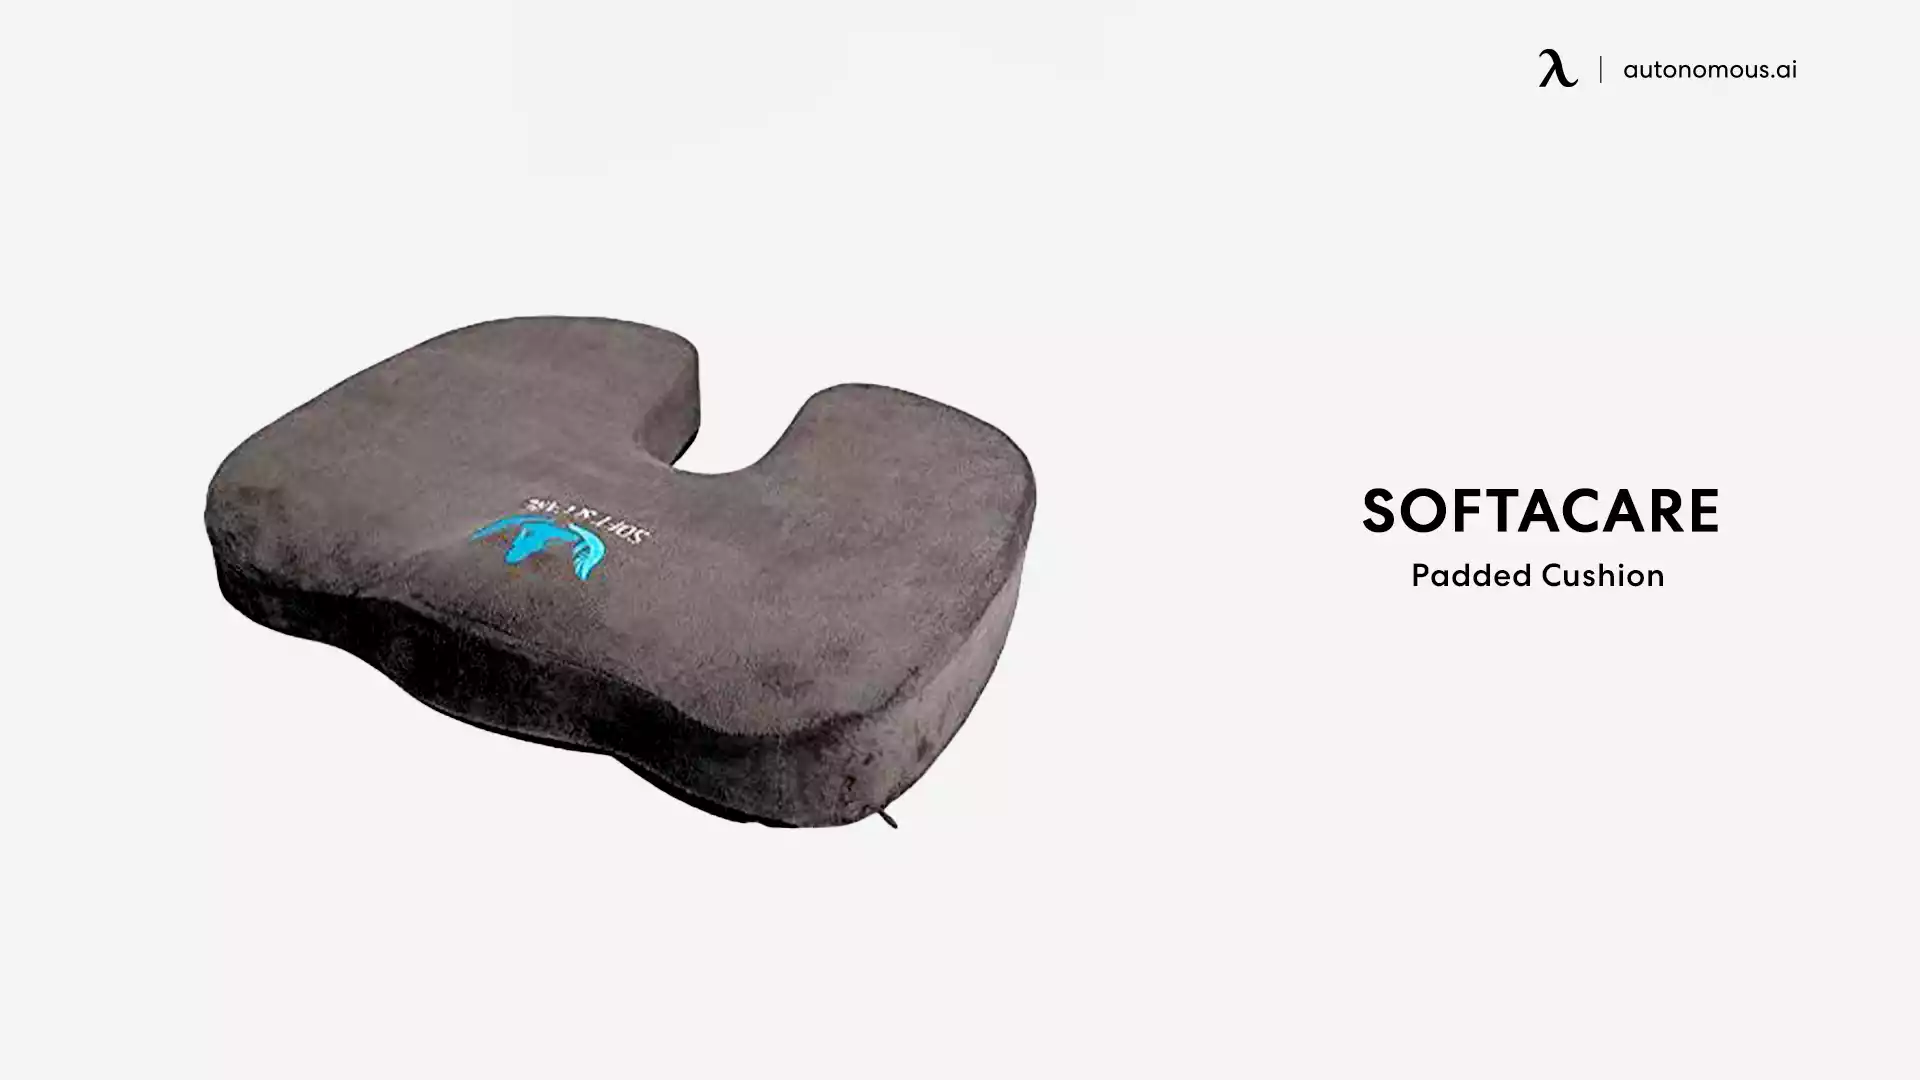 SOFTaCARE Padded Cushion